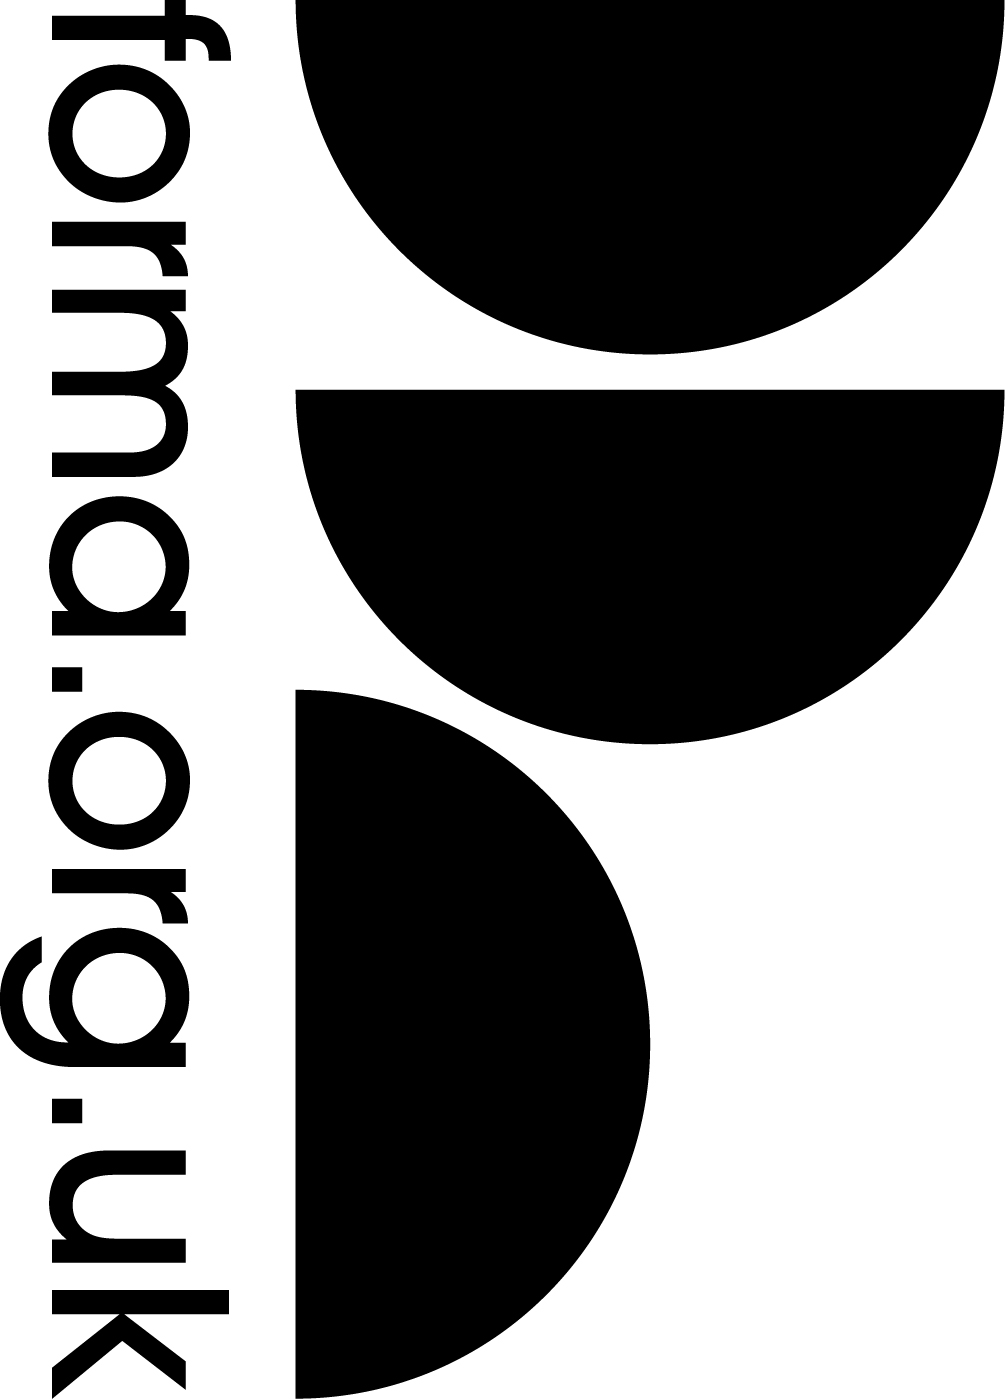 logo for Forma. Website forma.org.uk running vertically against three semi-circles.